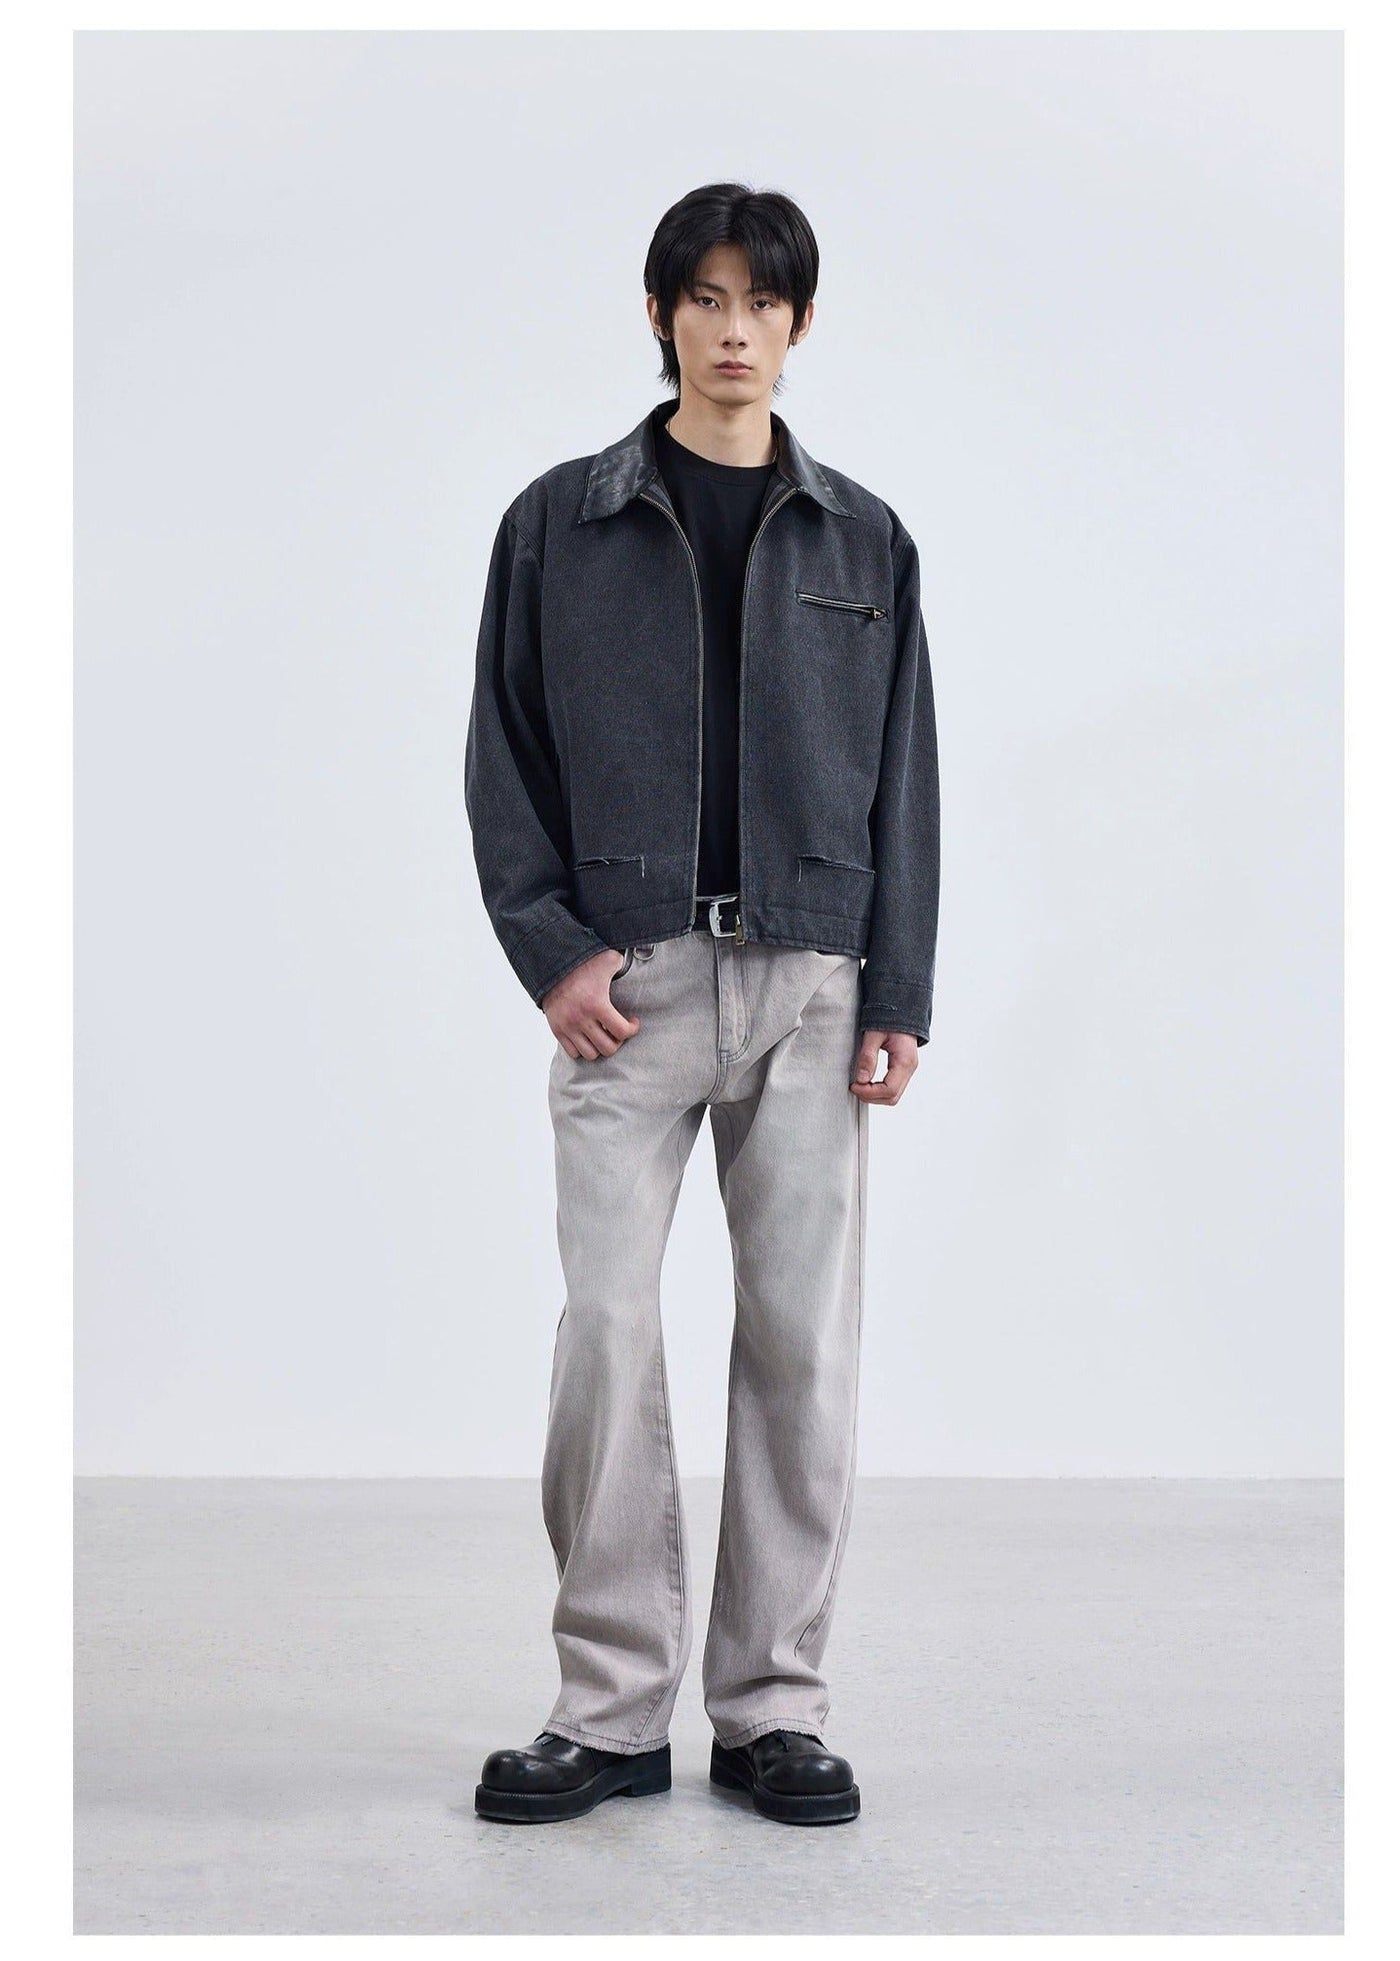 PU Leather Collar Multi Zipped Pocket Jacket Korean Street Fashion Jacket By Terra Incognita Shop Online at OH Vault